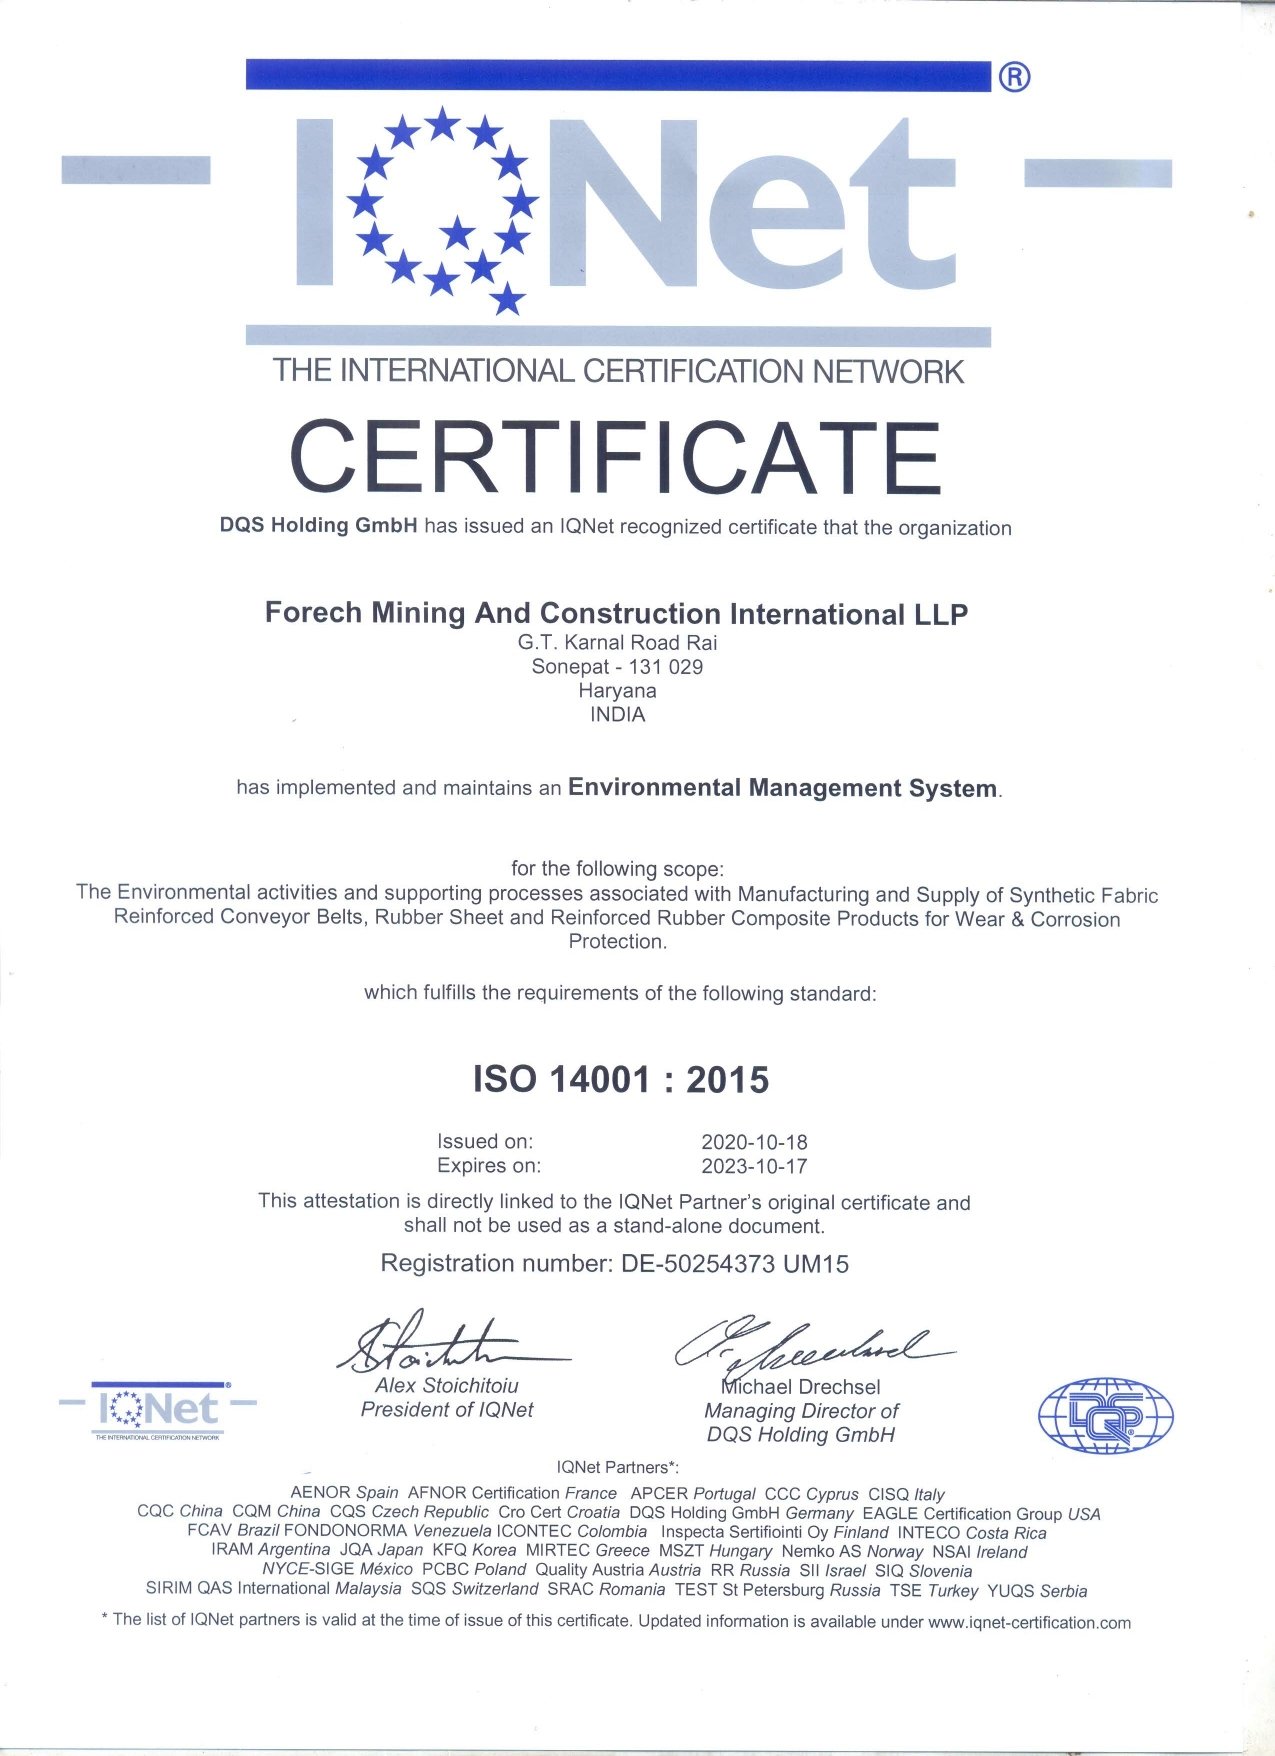 Escaneo de ISO 14001: 2015 (IQ NET) - Certificado FMCI